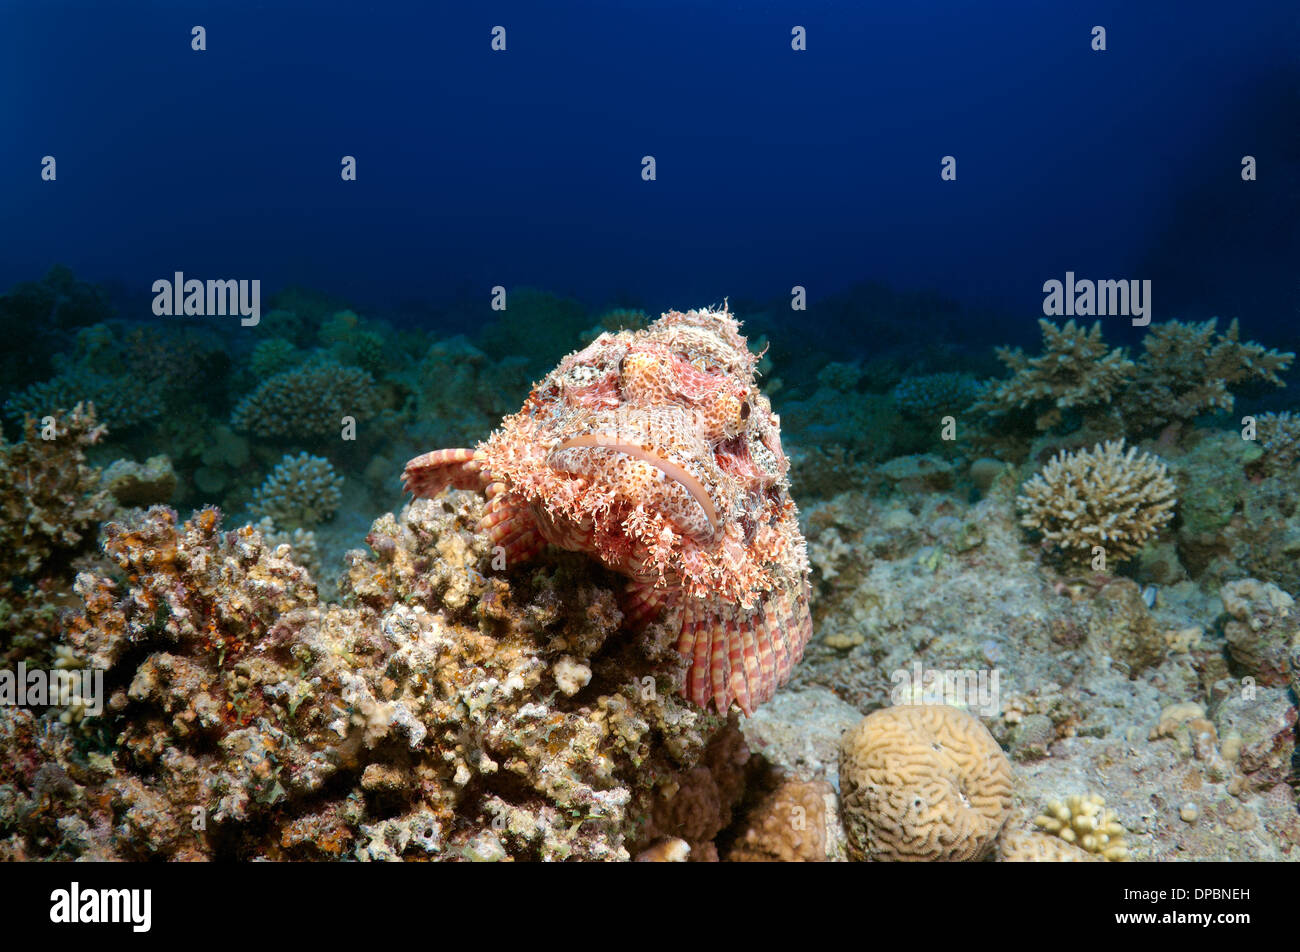 Tassled scorpionfish (Scorpaenopsis oxycephala), Red sea, Egypt, Africa Stock Photo